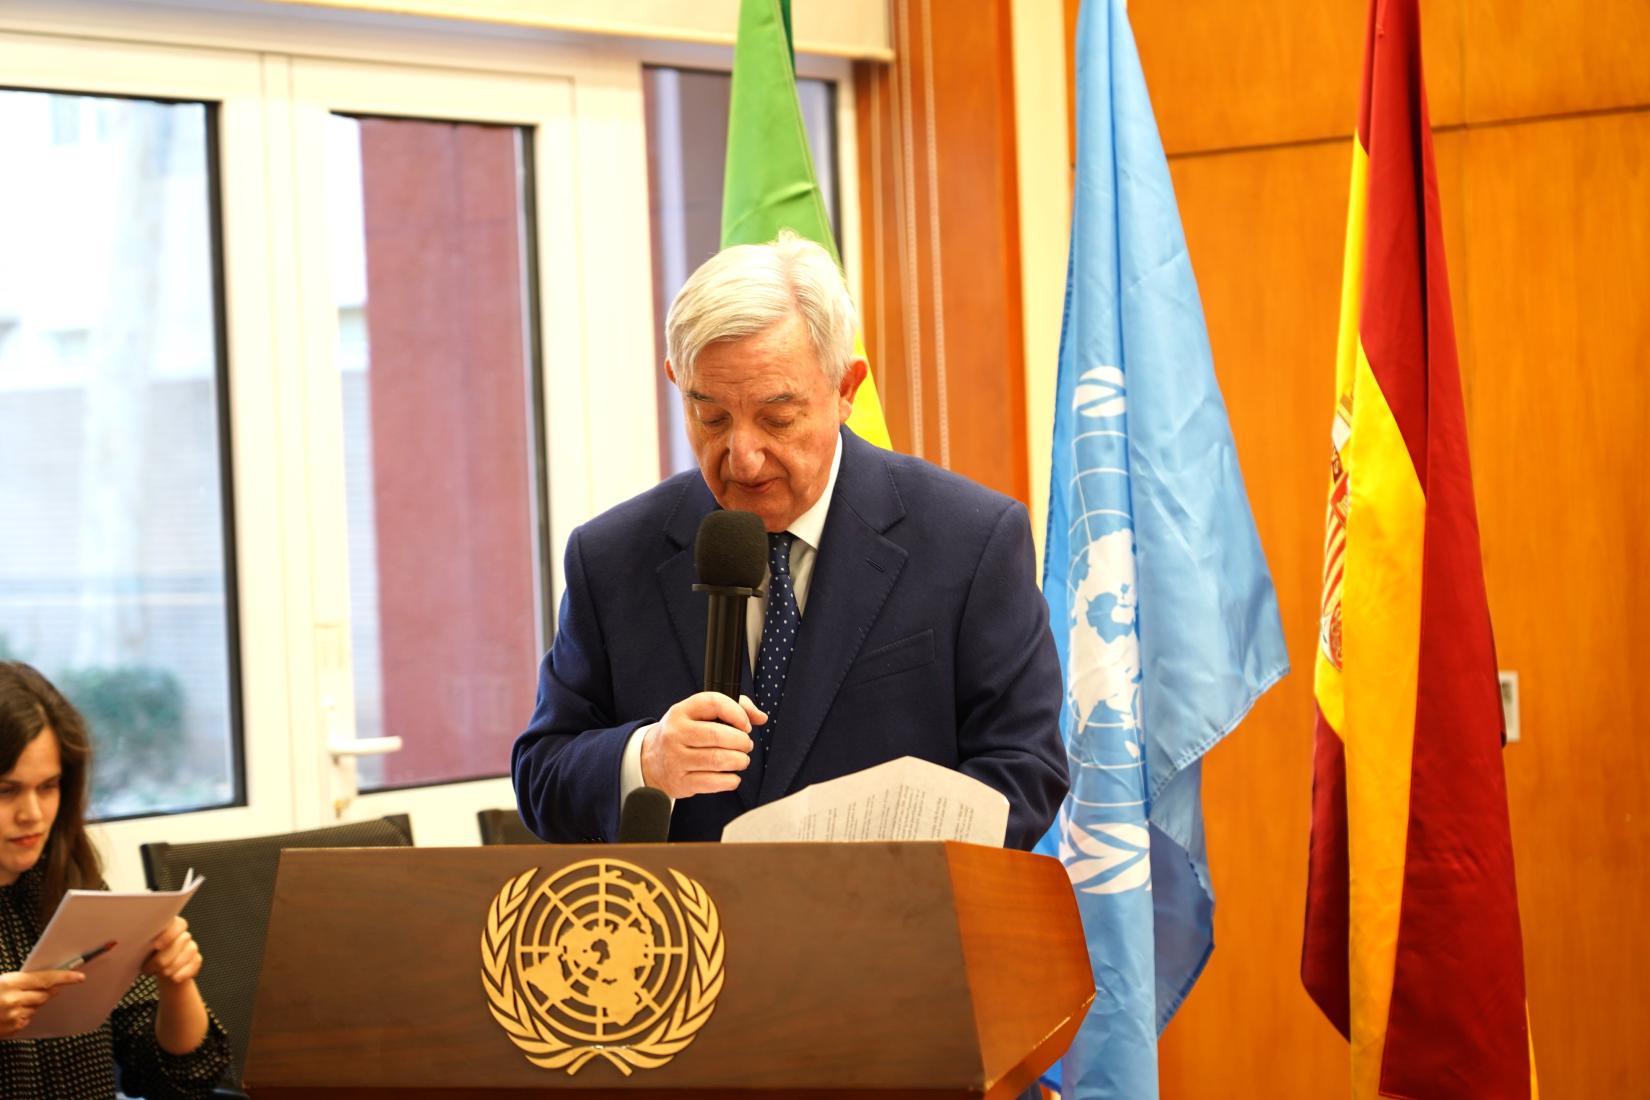 His Excellency Mr. Rafael Dezcallar de Mazarredo, Ambassador of Spain to China